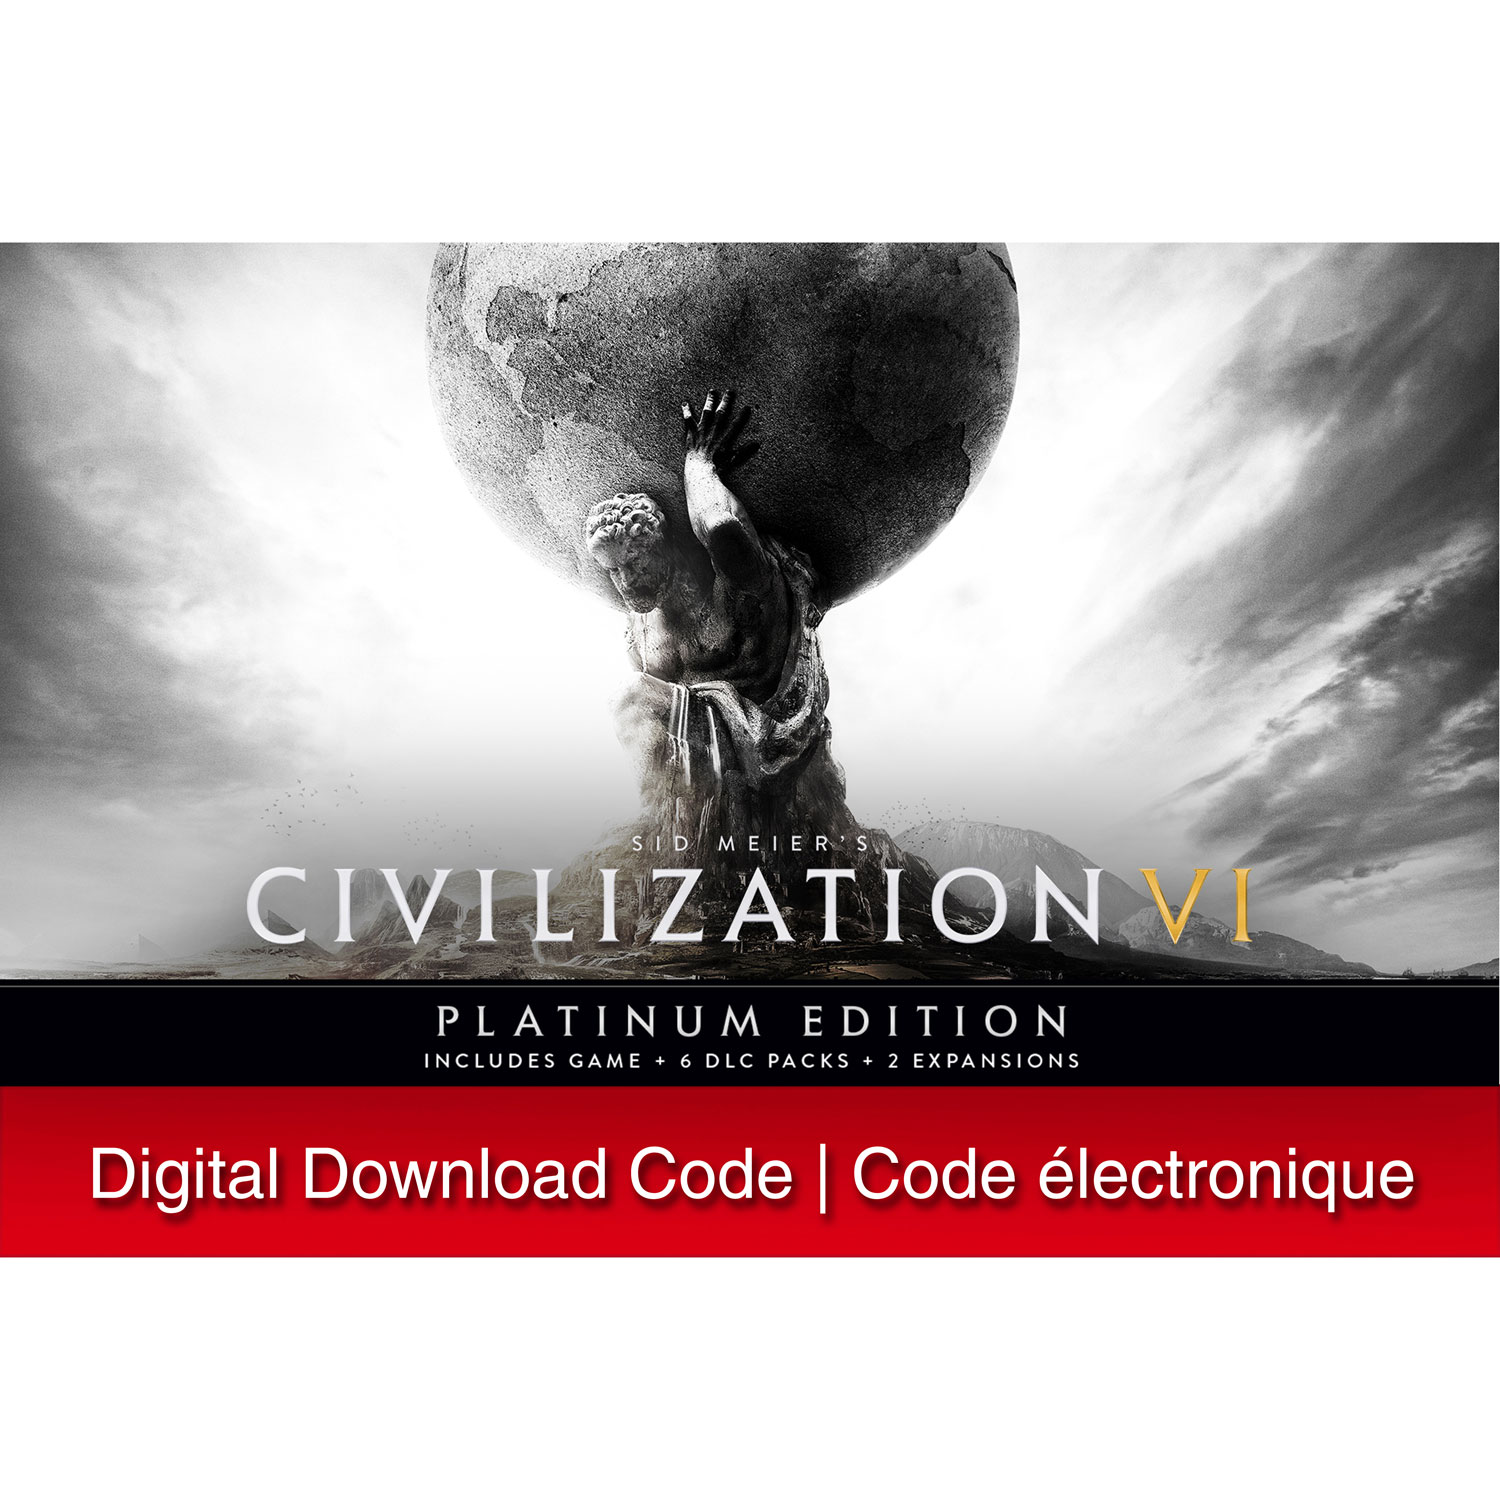 Sid Meier's Civilization VI Platinum Edition (Switch) - Digital Download